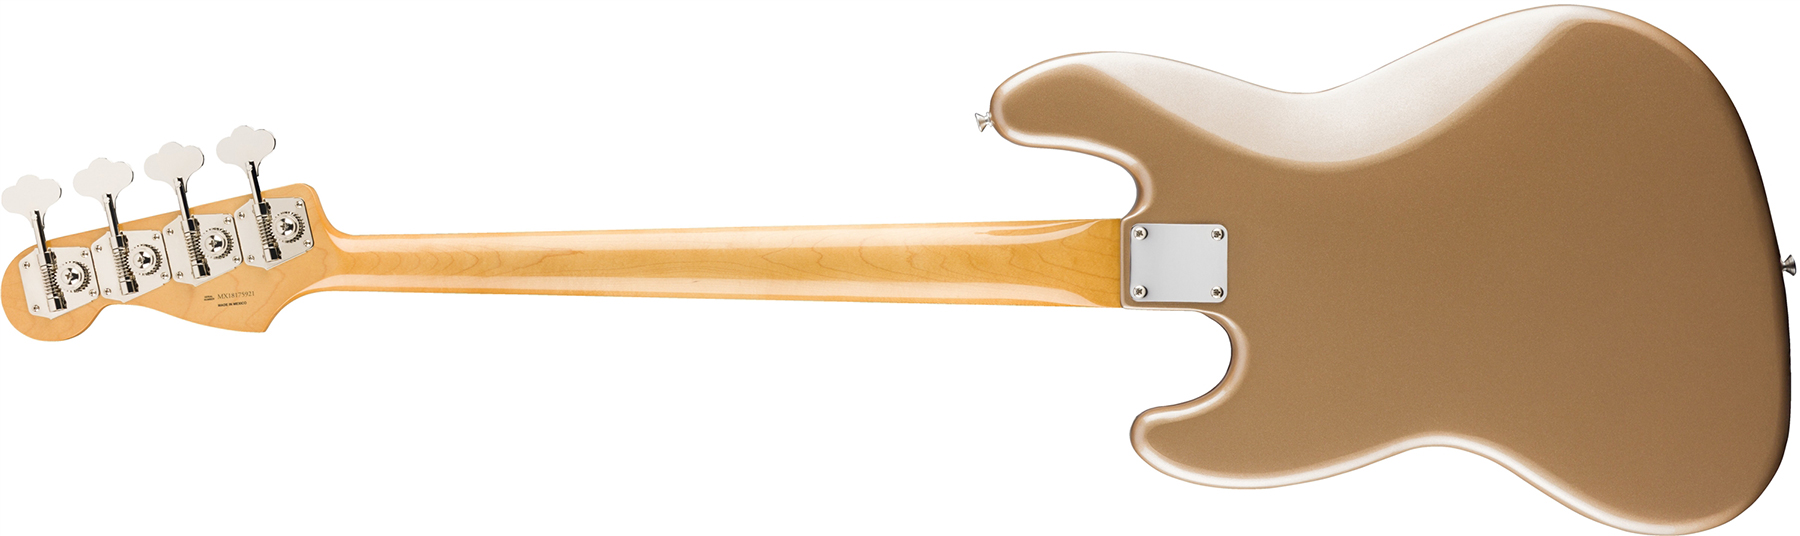 Fender Jazz Bass 60s Vintera Vintage Mex Pf - Firemist Gold - Bajo eléctrico de cuerpo sólido - Variation 1